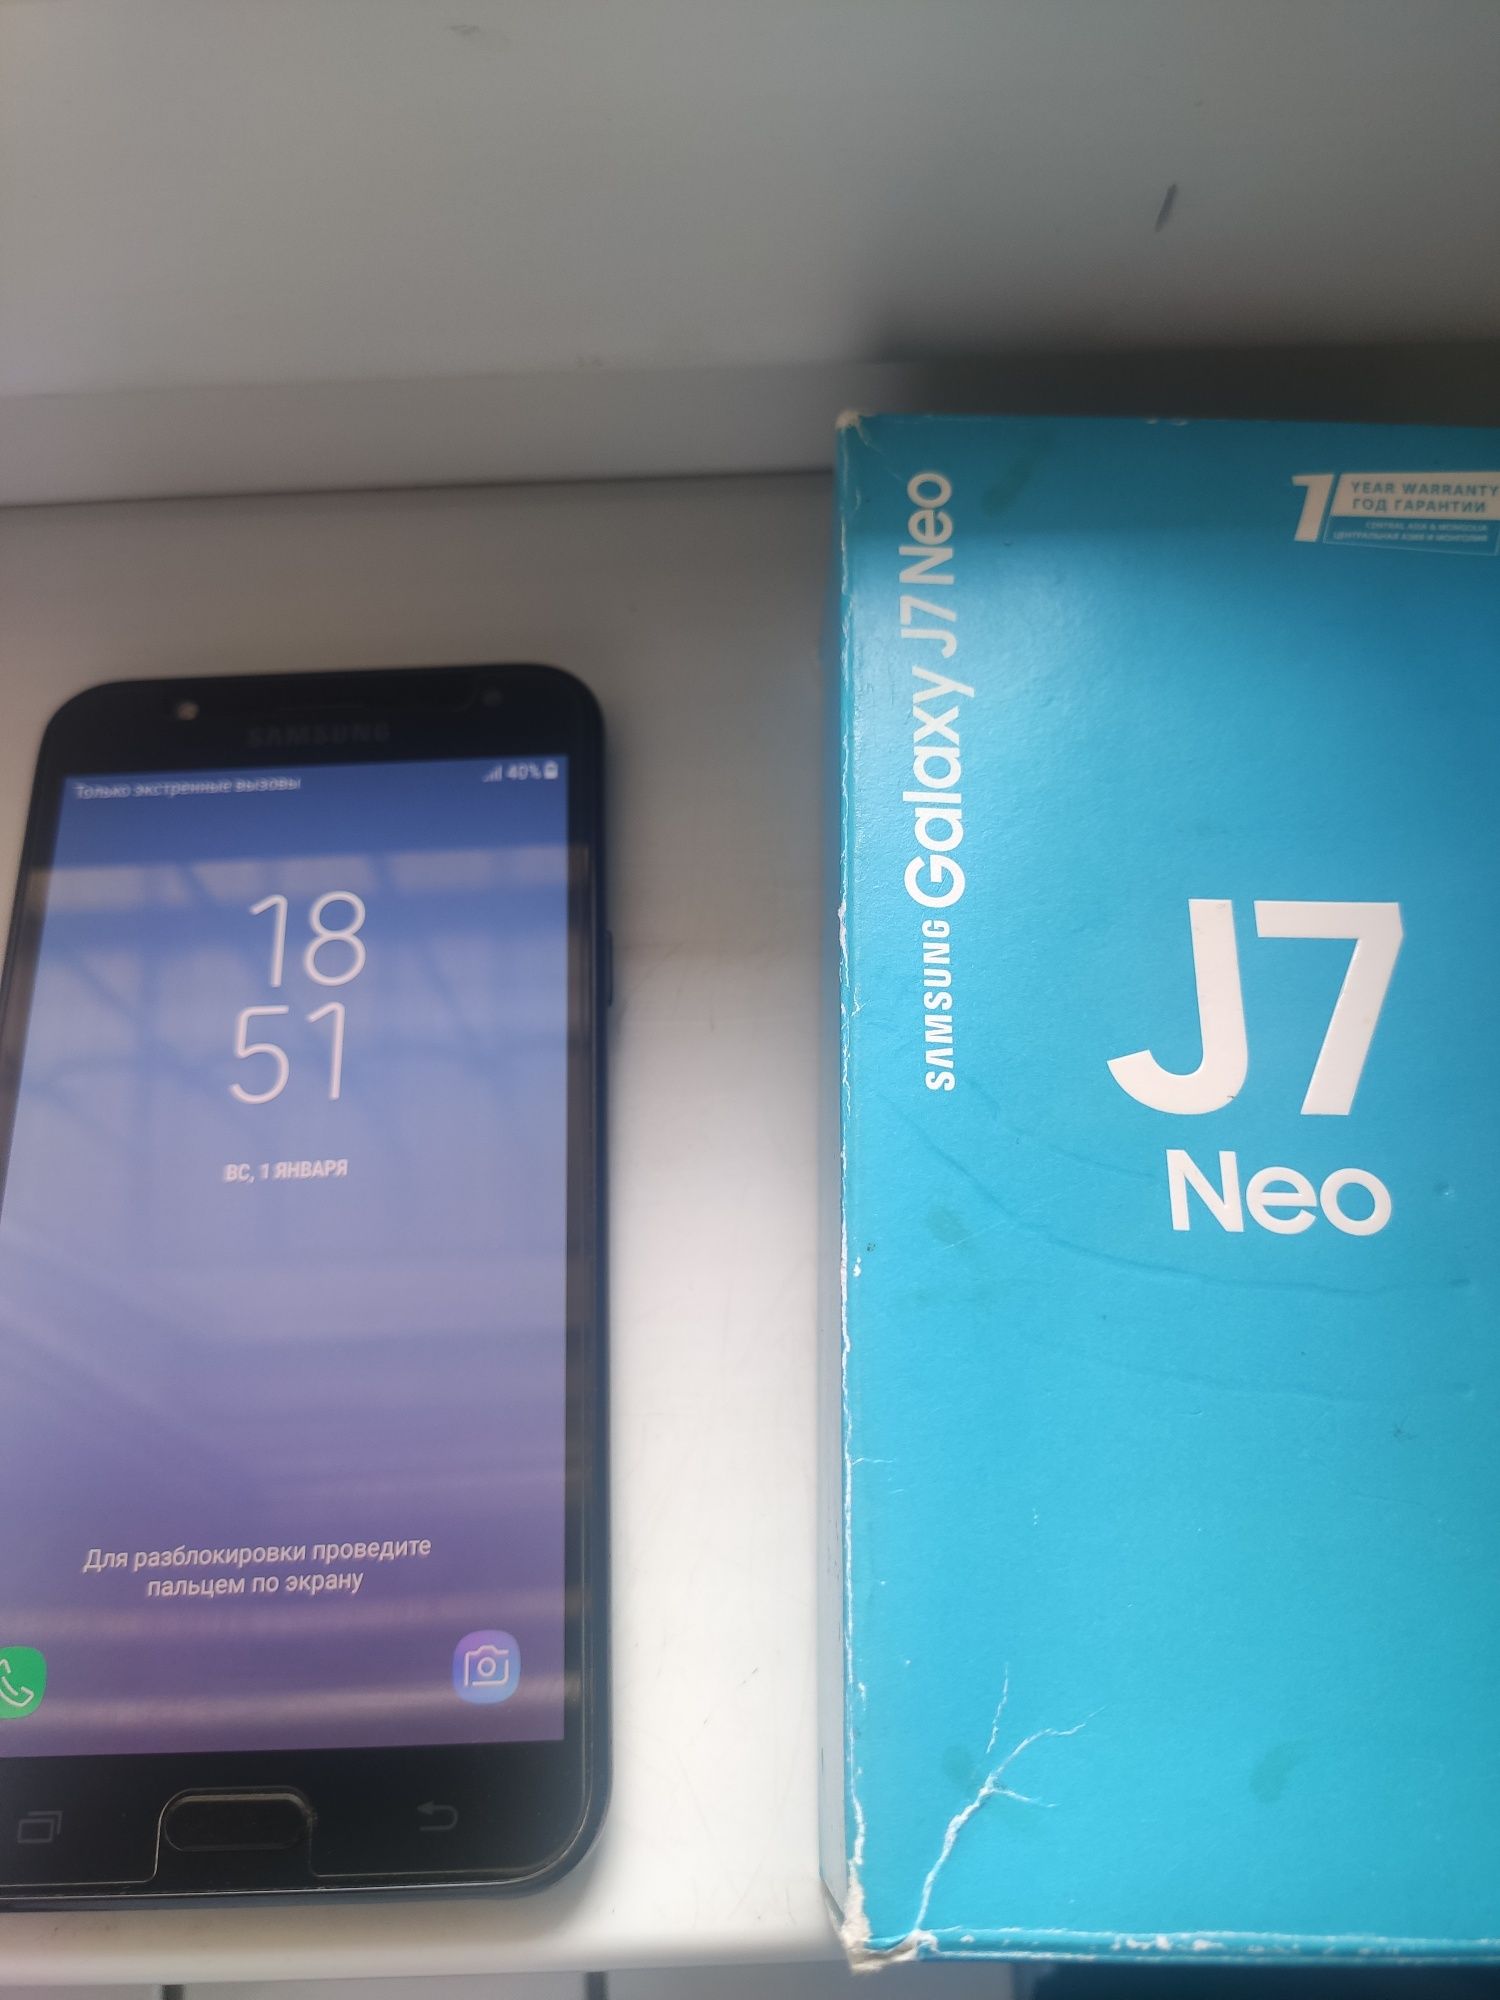 Samsung j7 neo 16 gb